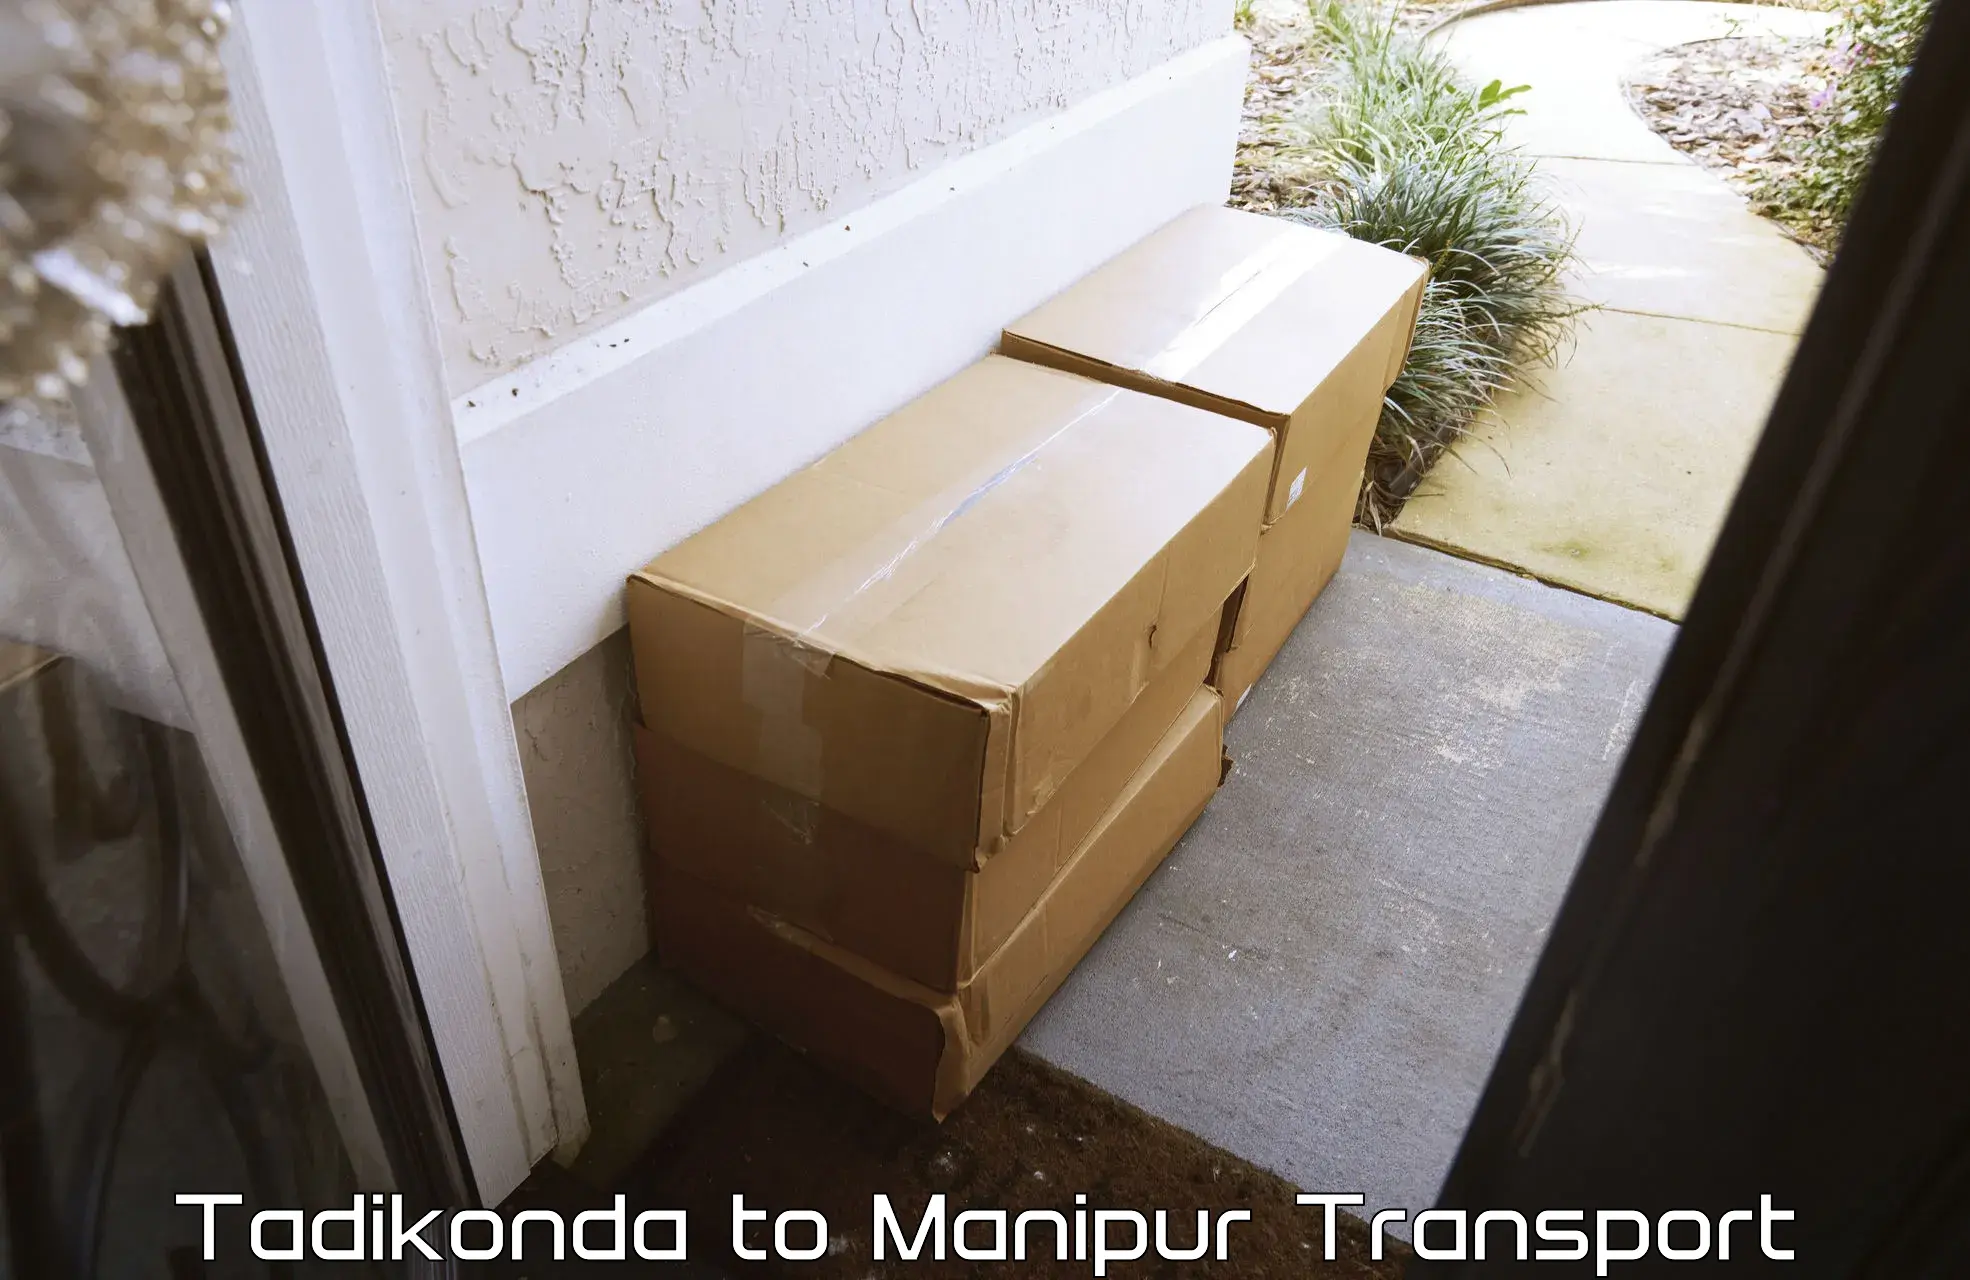 Bike shipping service Tadikonda to Manipur